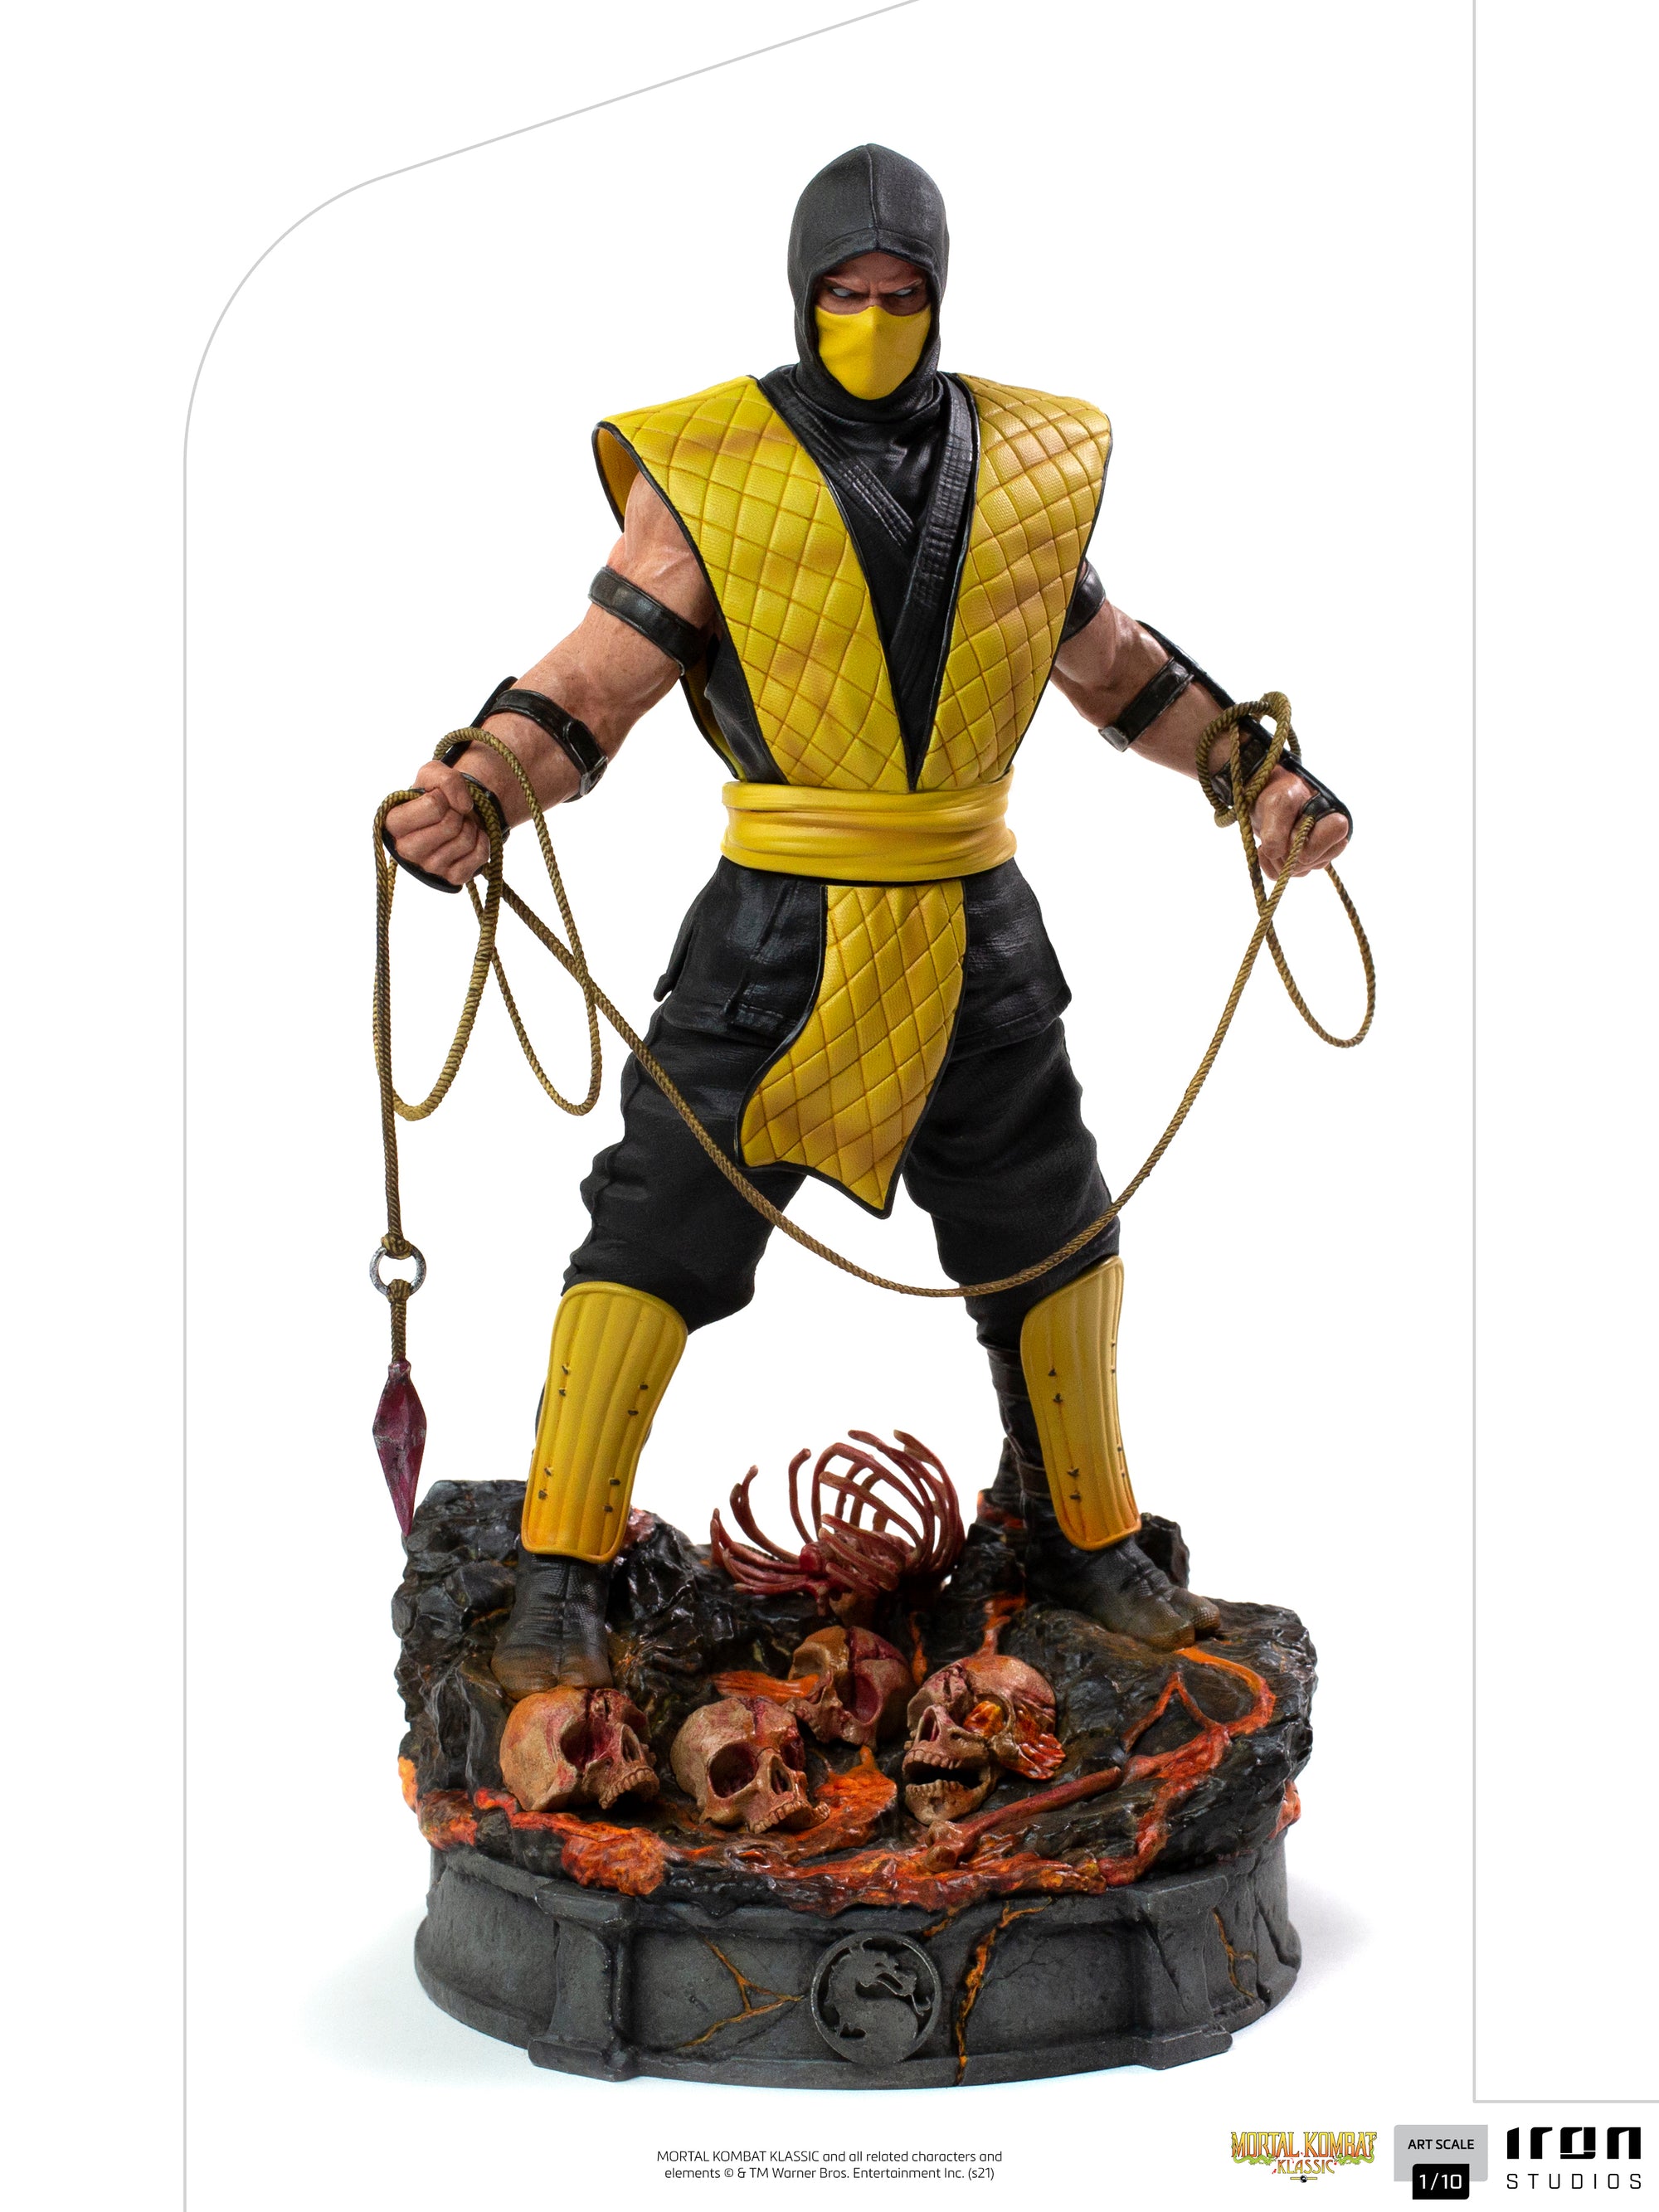 Mortal Kombat Shao Kahn 1/3 Scale Limited Edition Statue